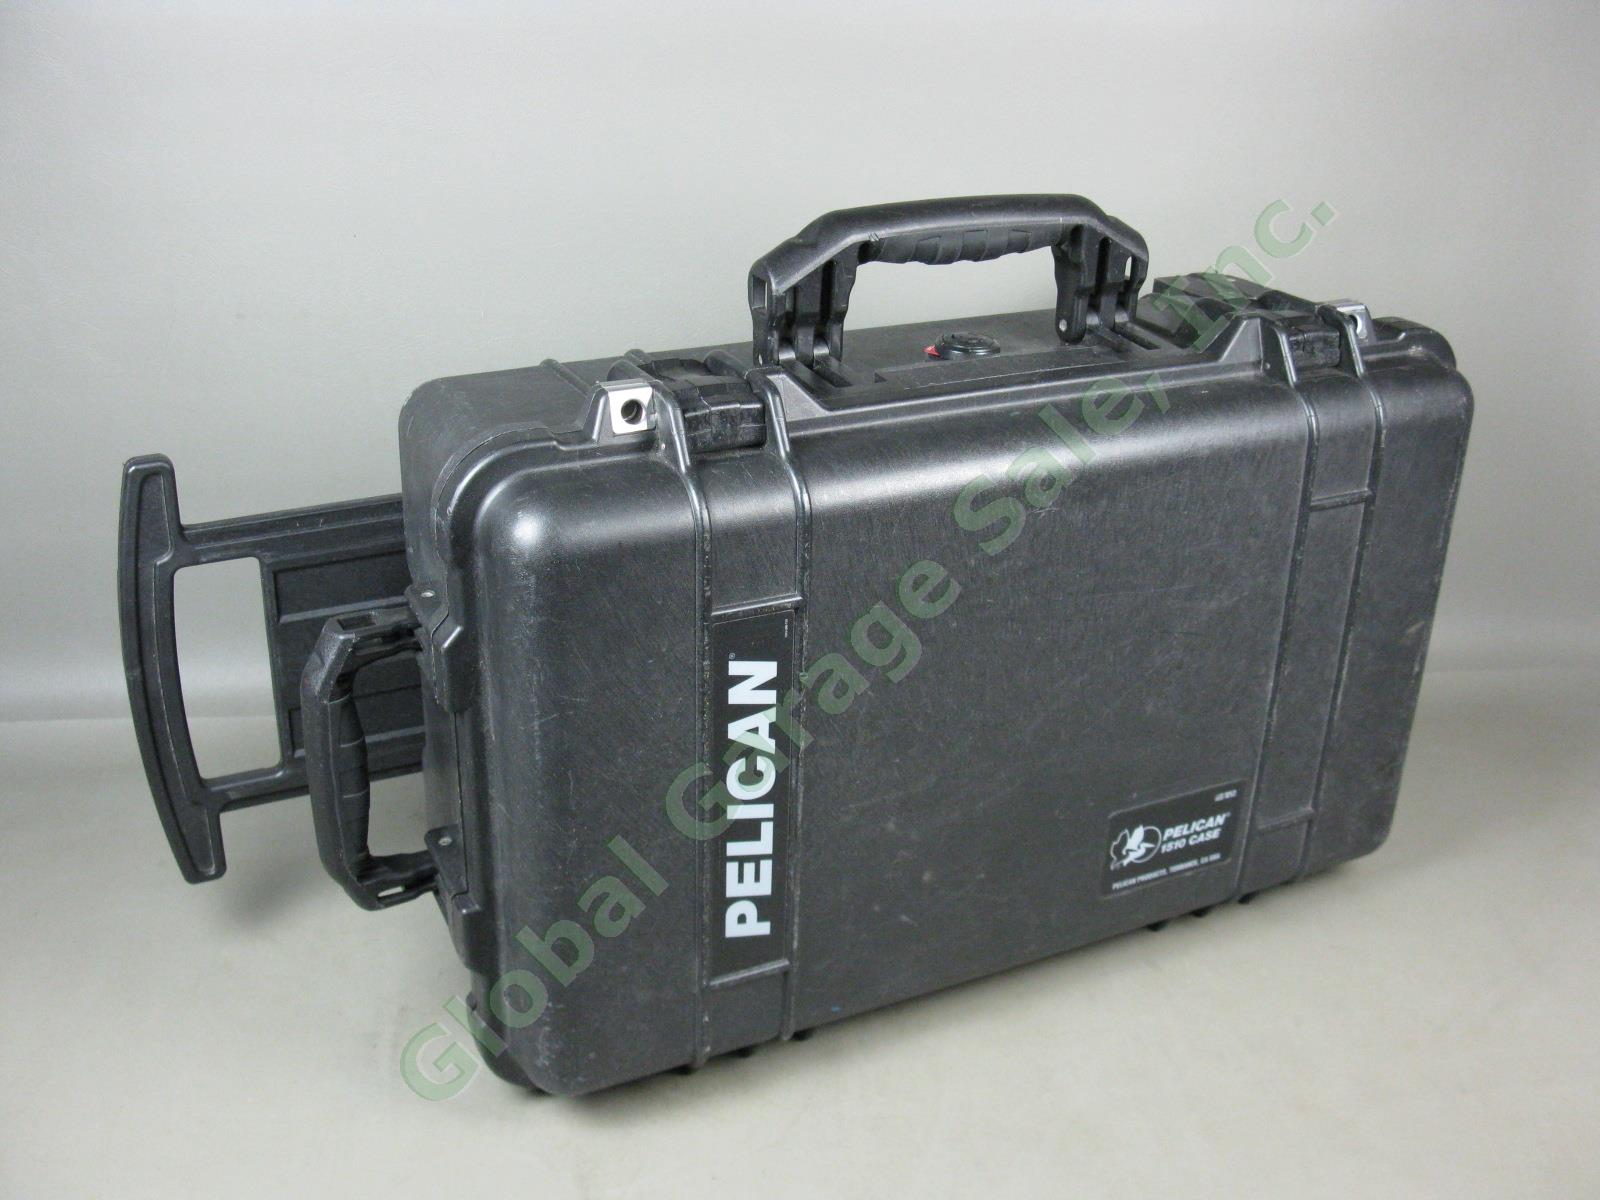 Pelican 1510 Multi Purpose Camera Equipment Carry-On Case + Foam Padded Dividers